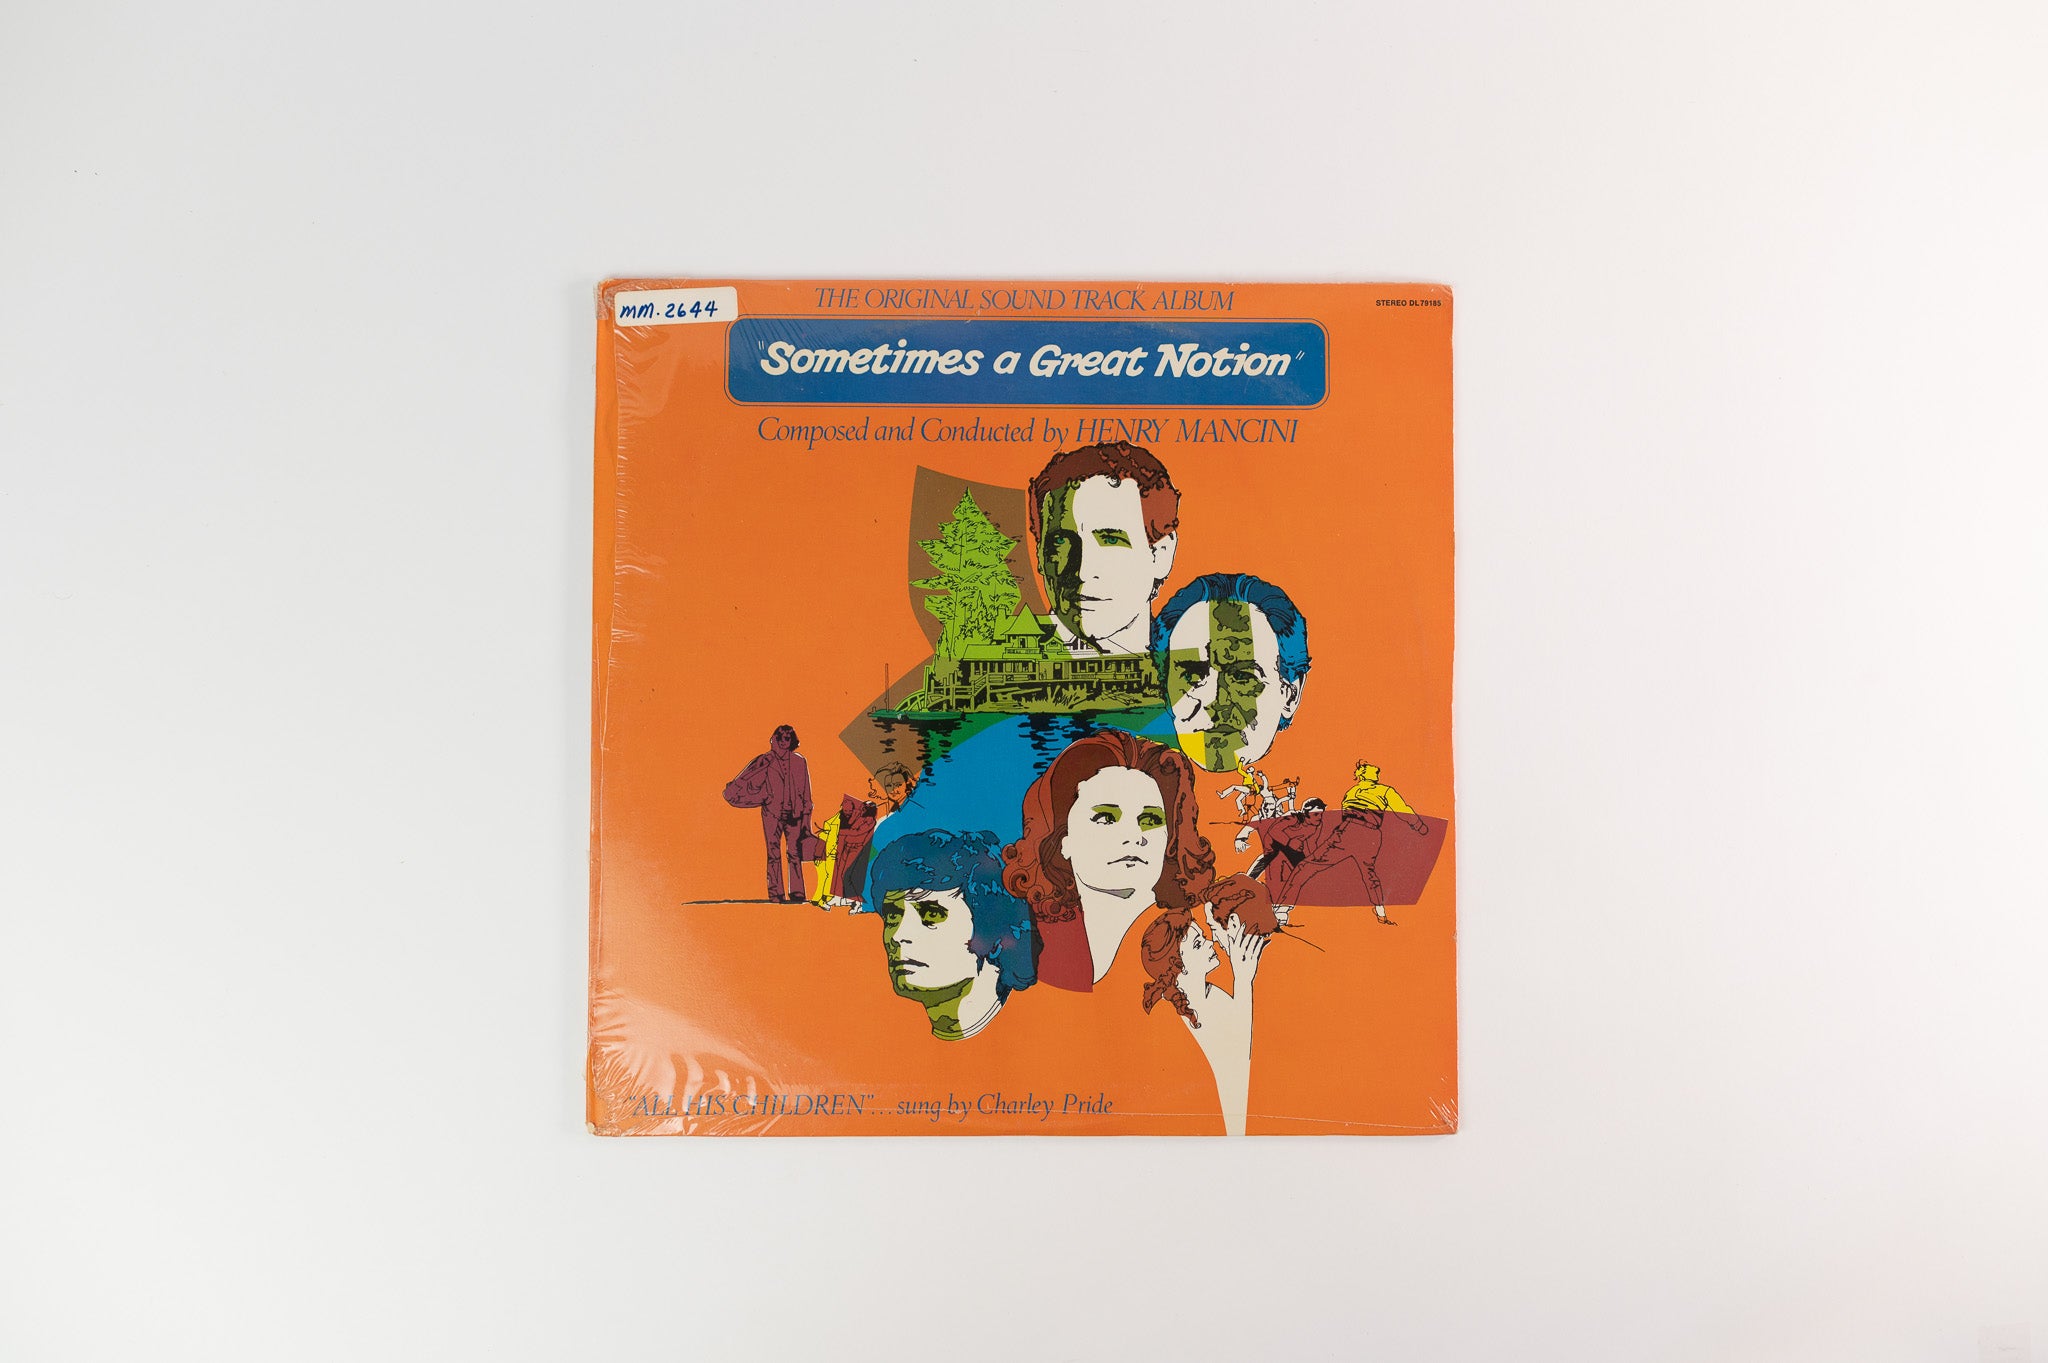 Henry Mancini - Sometimes A Great Notion (Original Soundtrack) on Decca Sealed